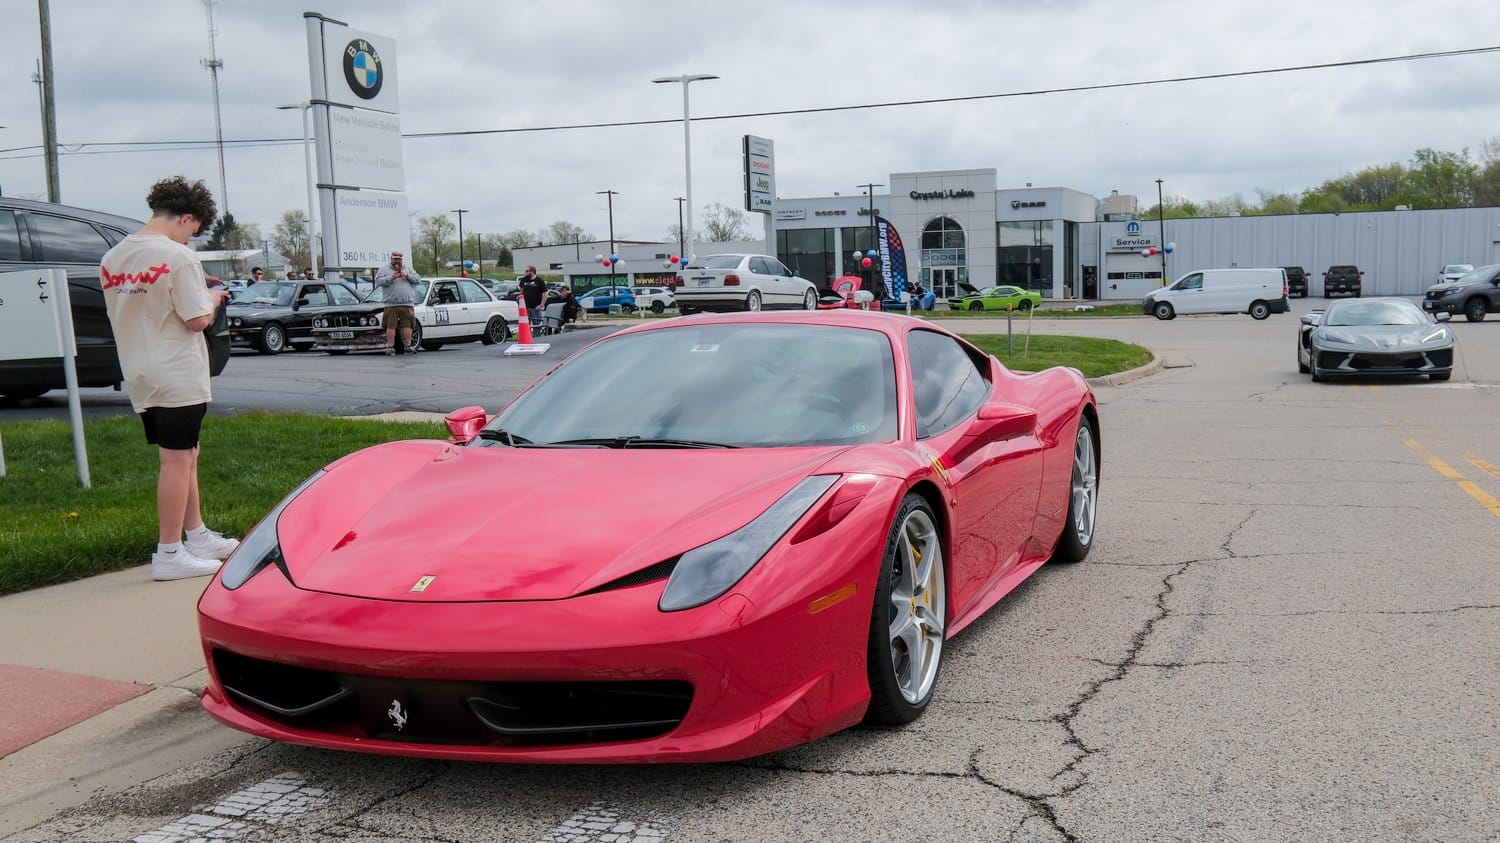 Ferrari parked in the street.